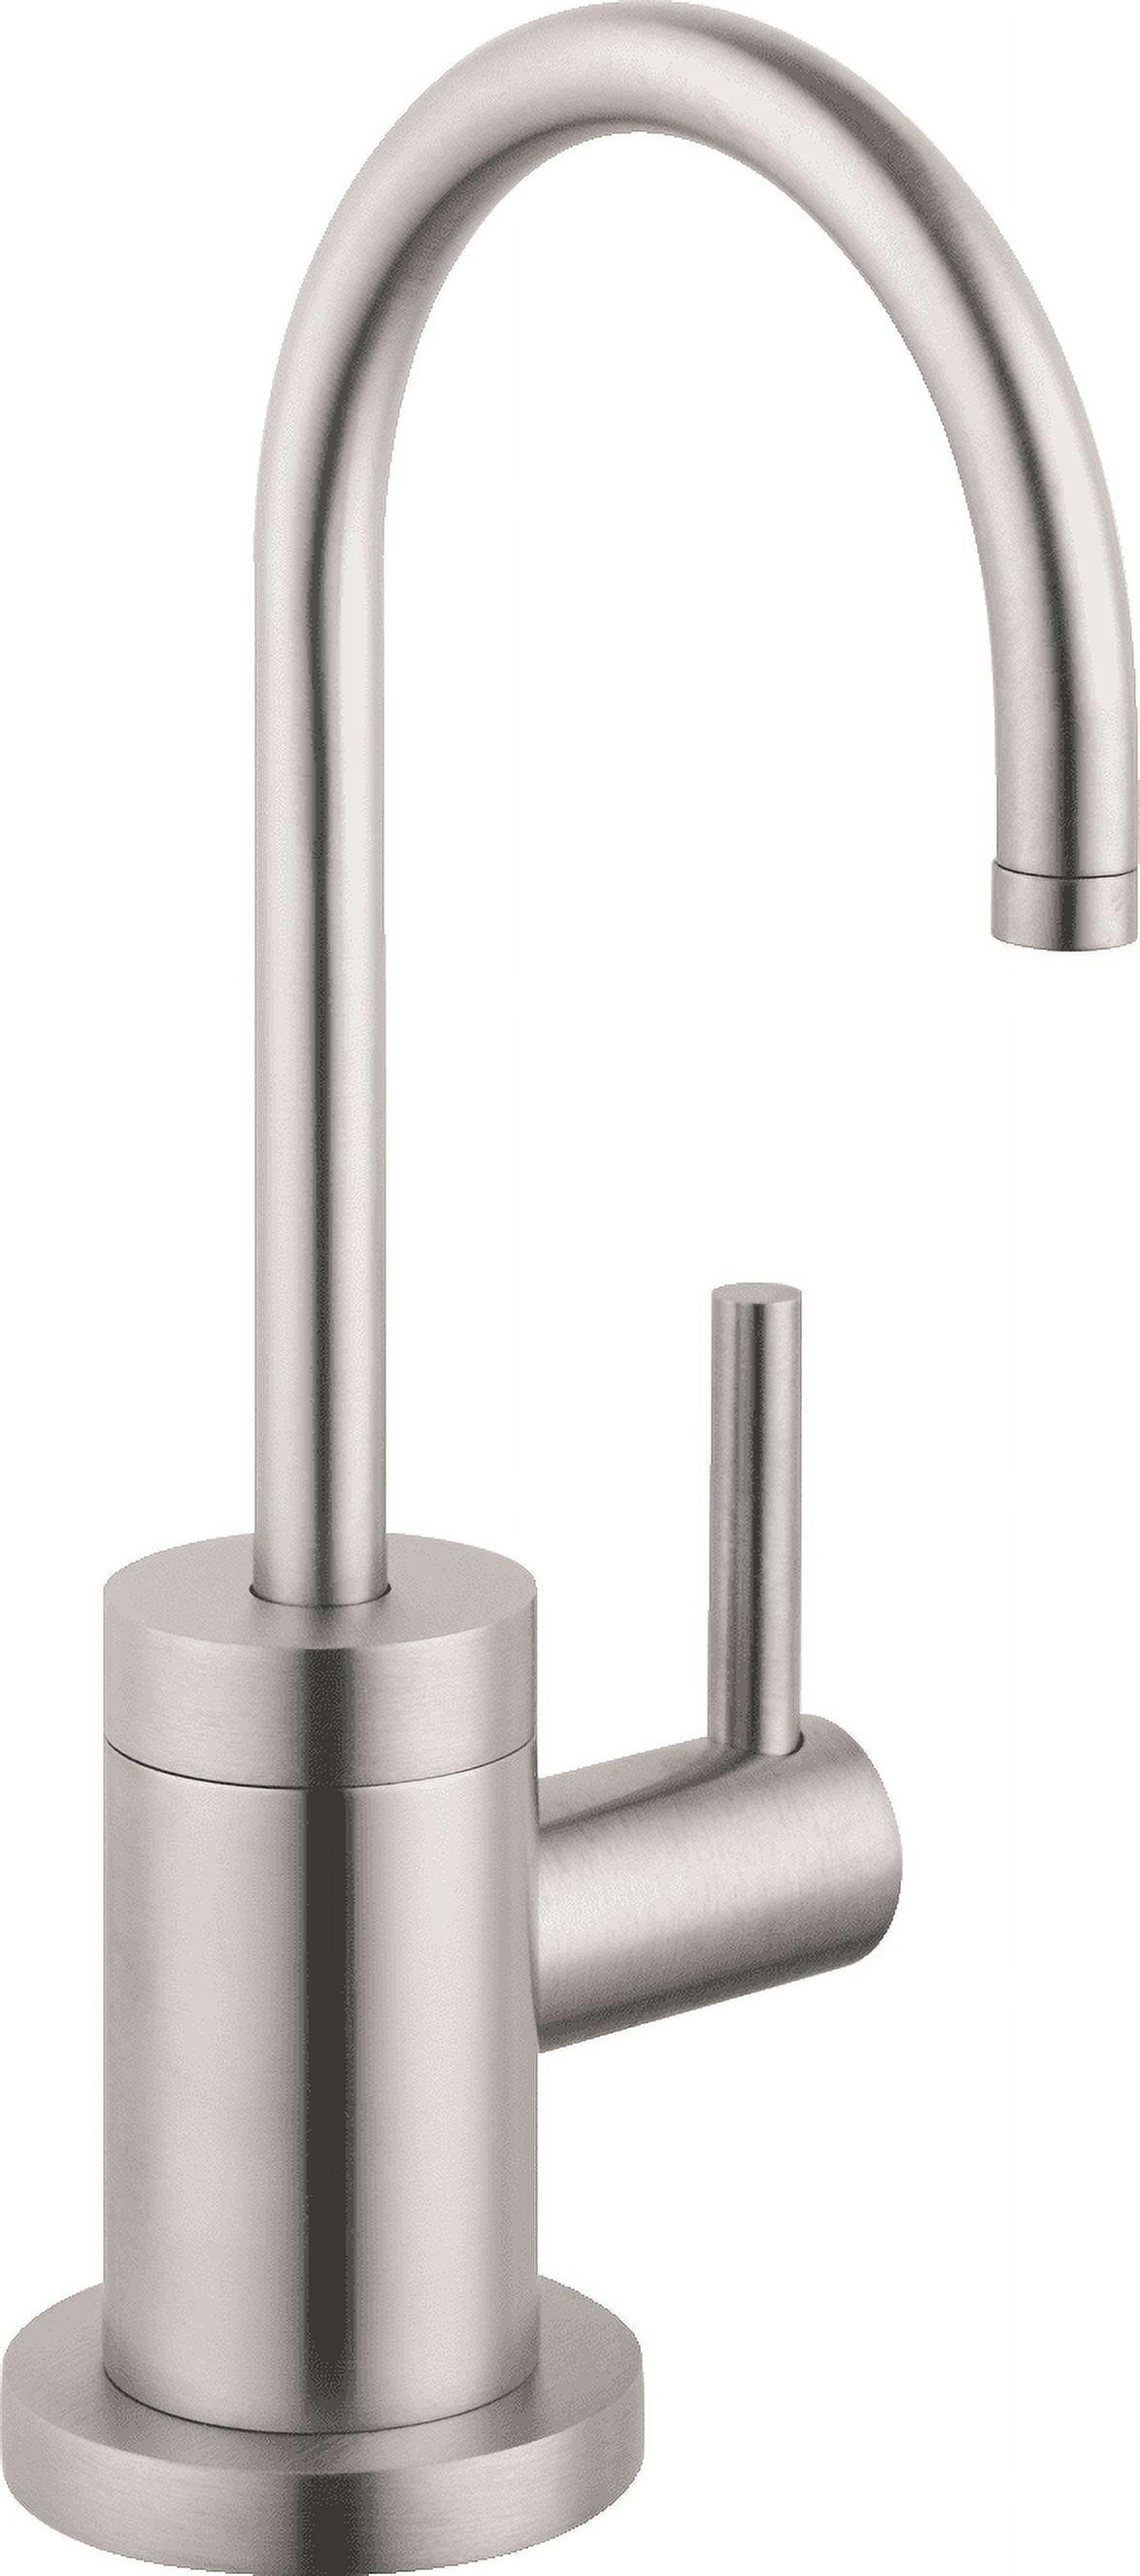 Modern Steel Optik Deck Mounted Kitchen Faucet with 360° Swivel